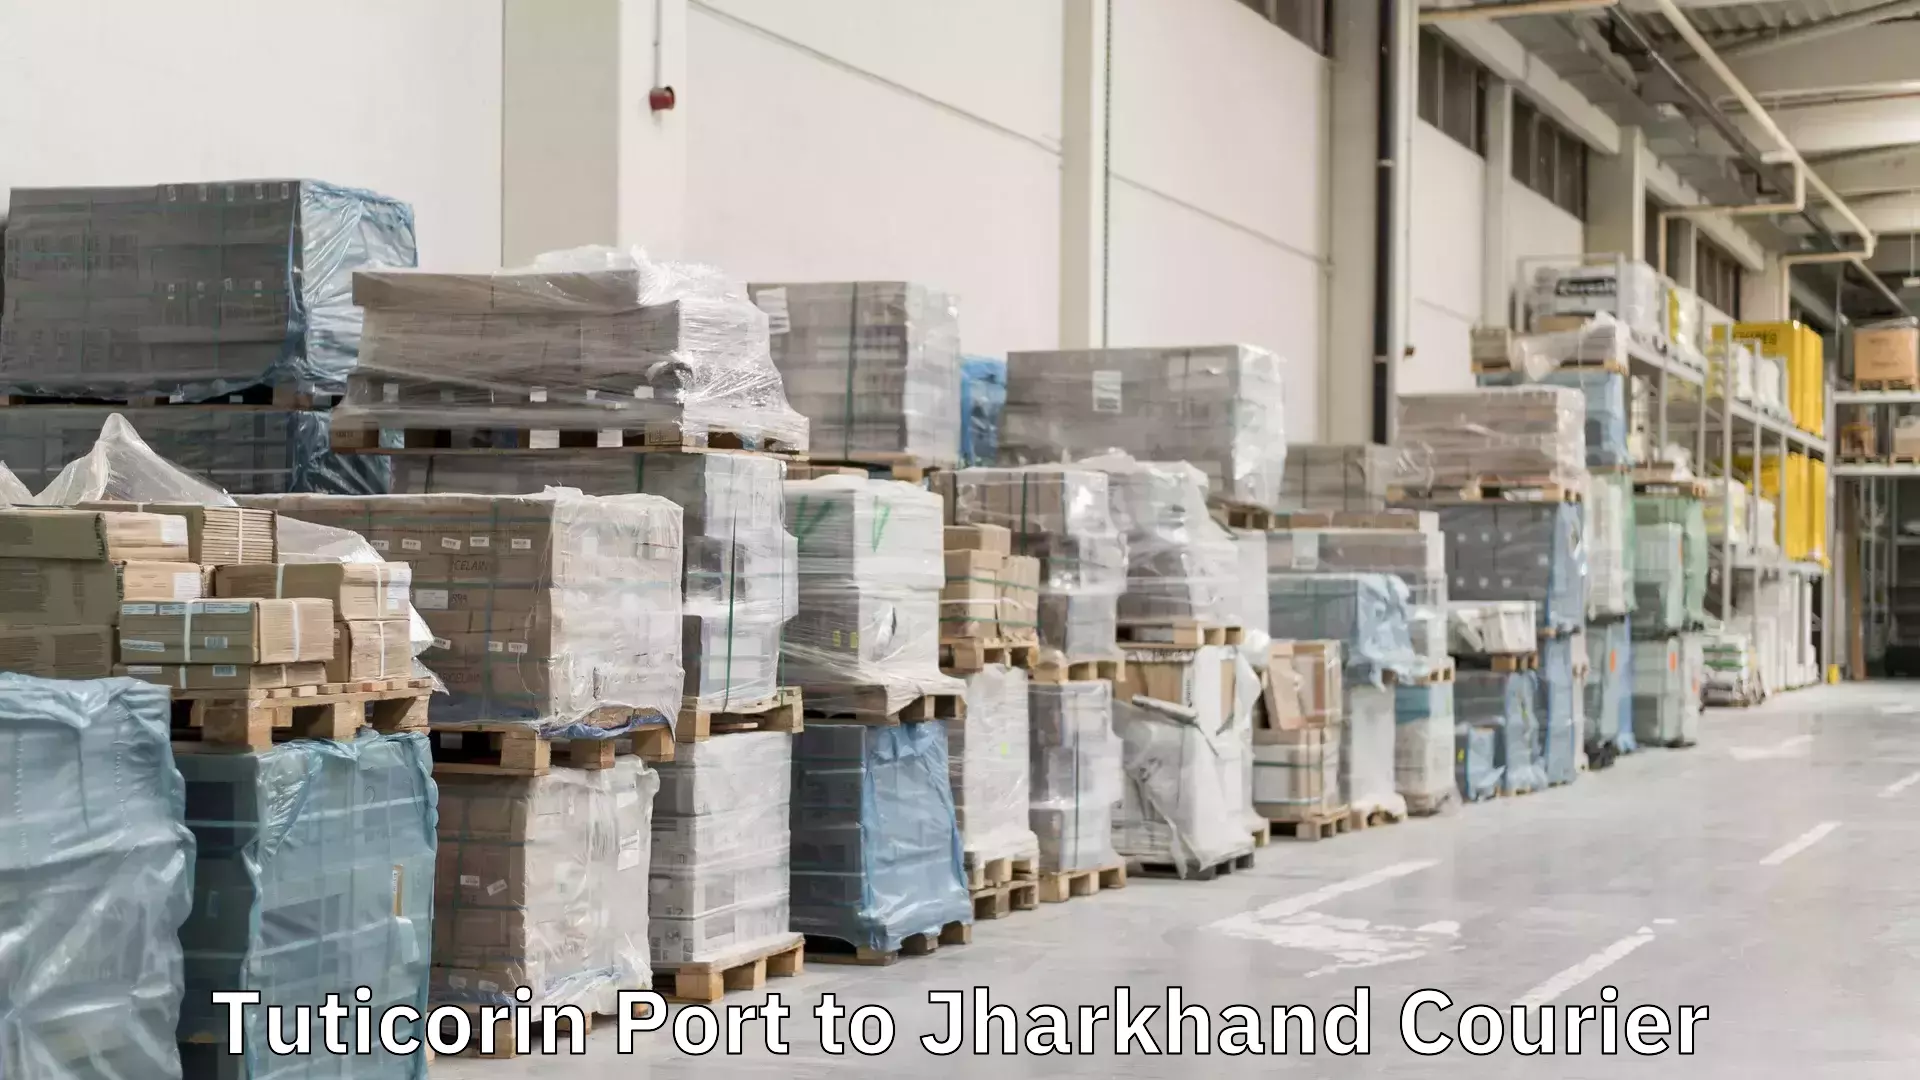 Express logistics service in Tuticorin Port to Jharkhand